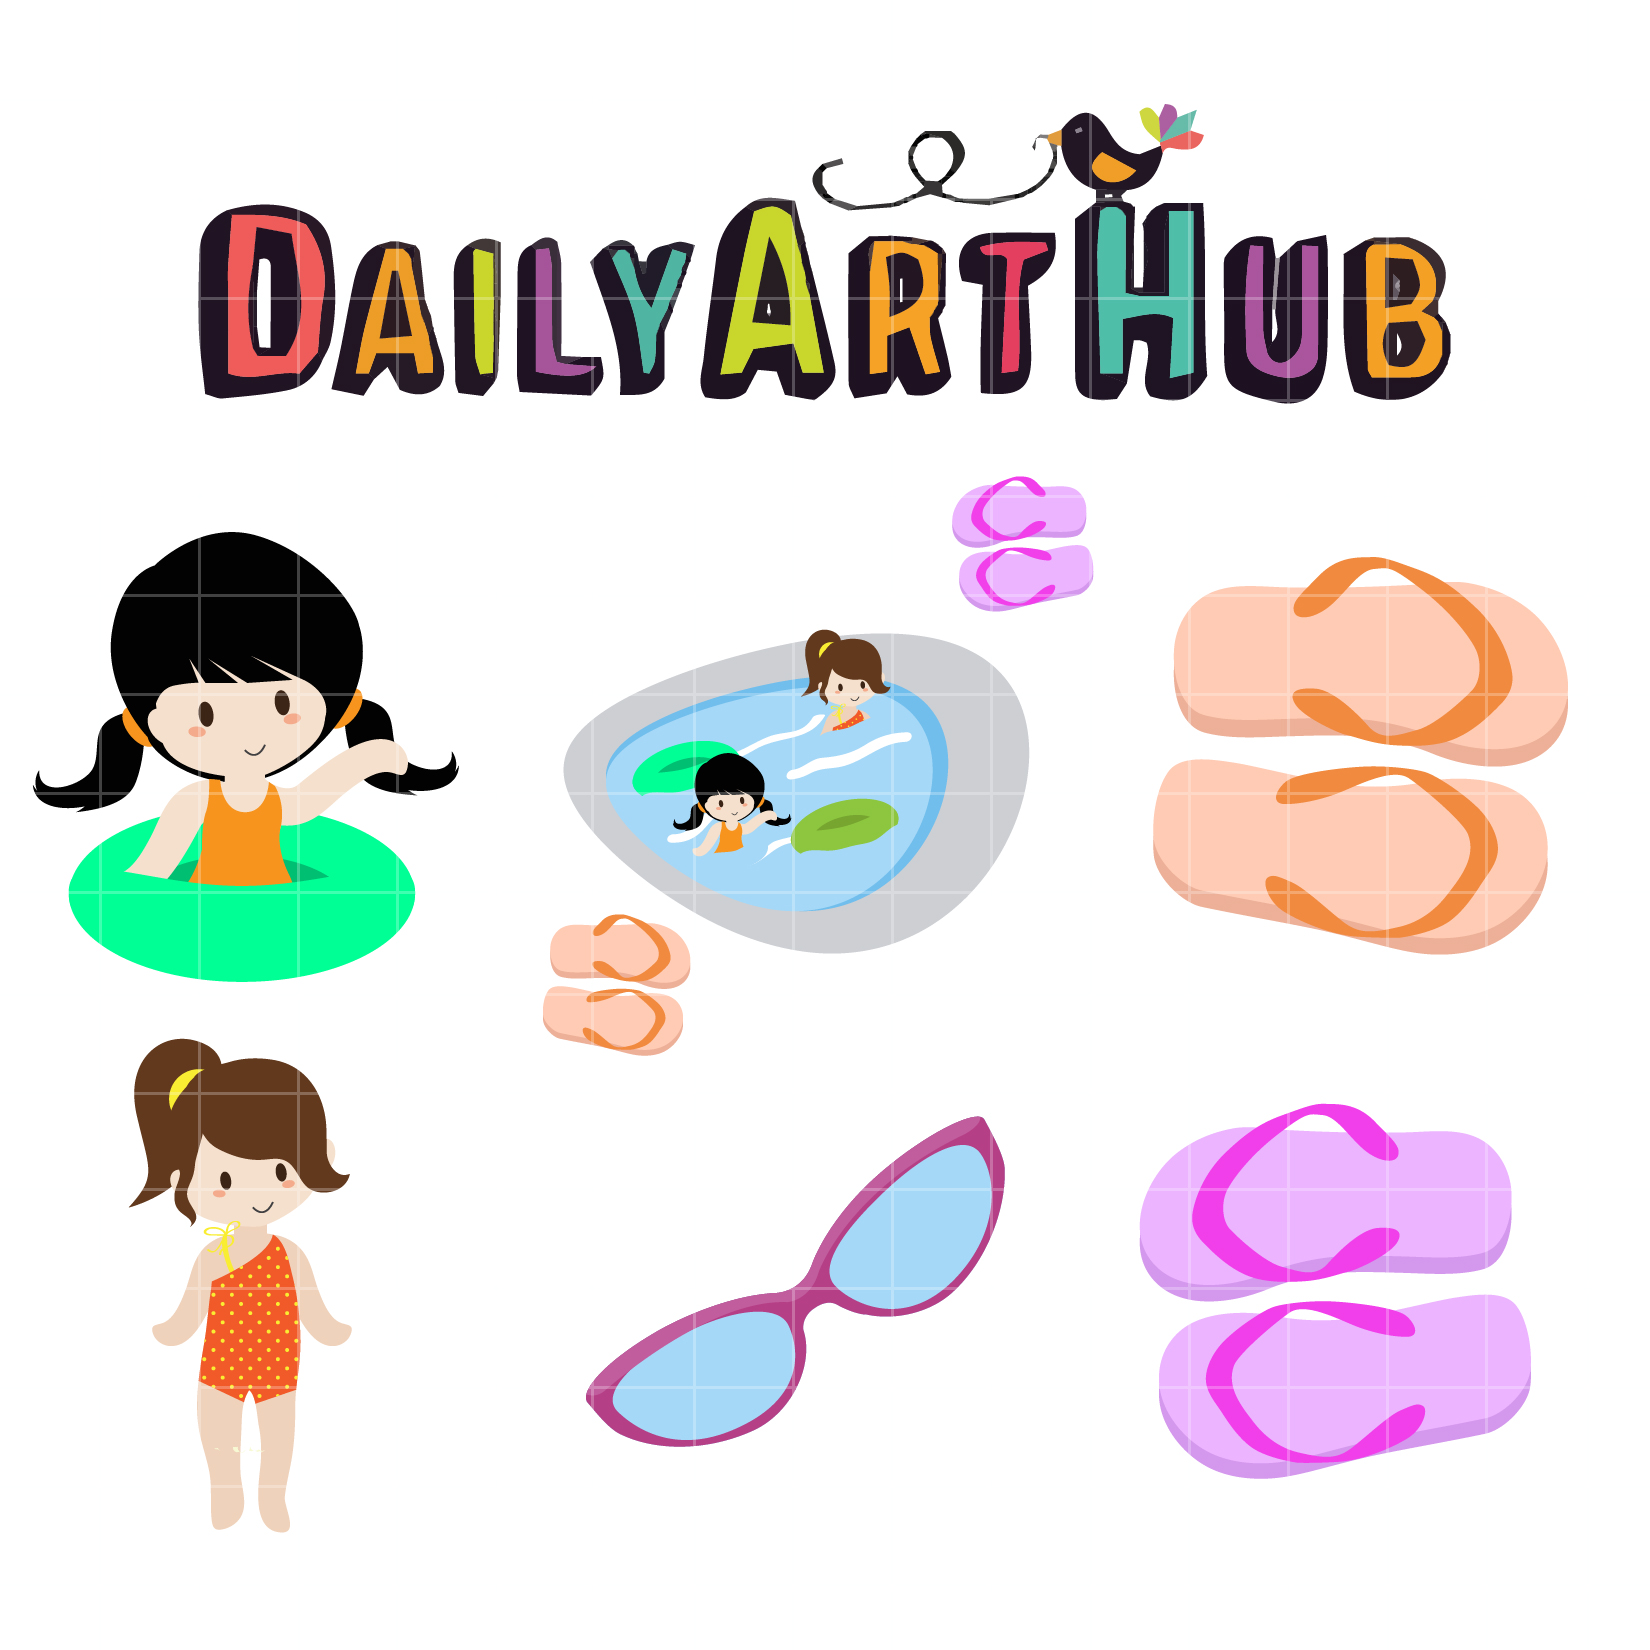 Pool Party Animals Clip Art Set – Daily Art Hub // Graphics, Alphabets & SVG